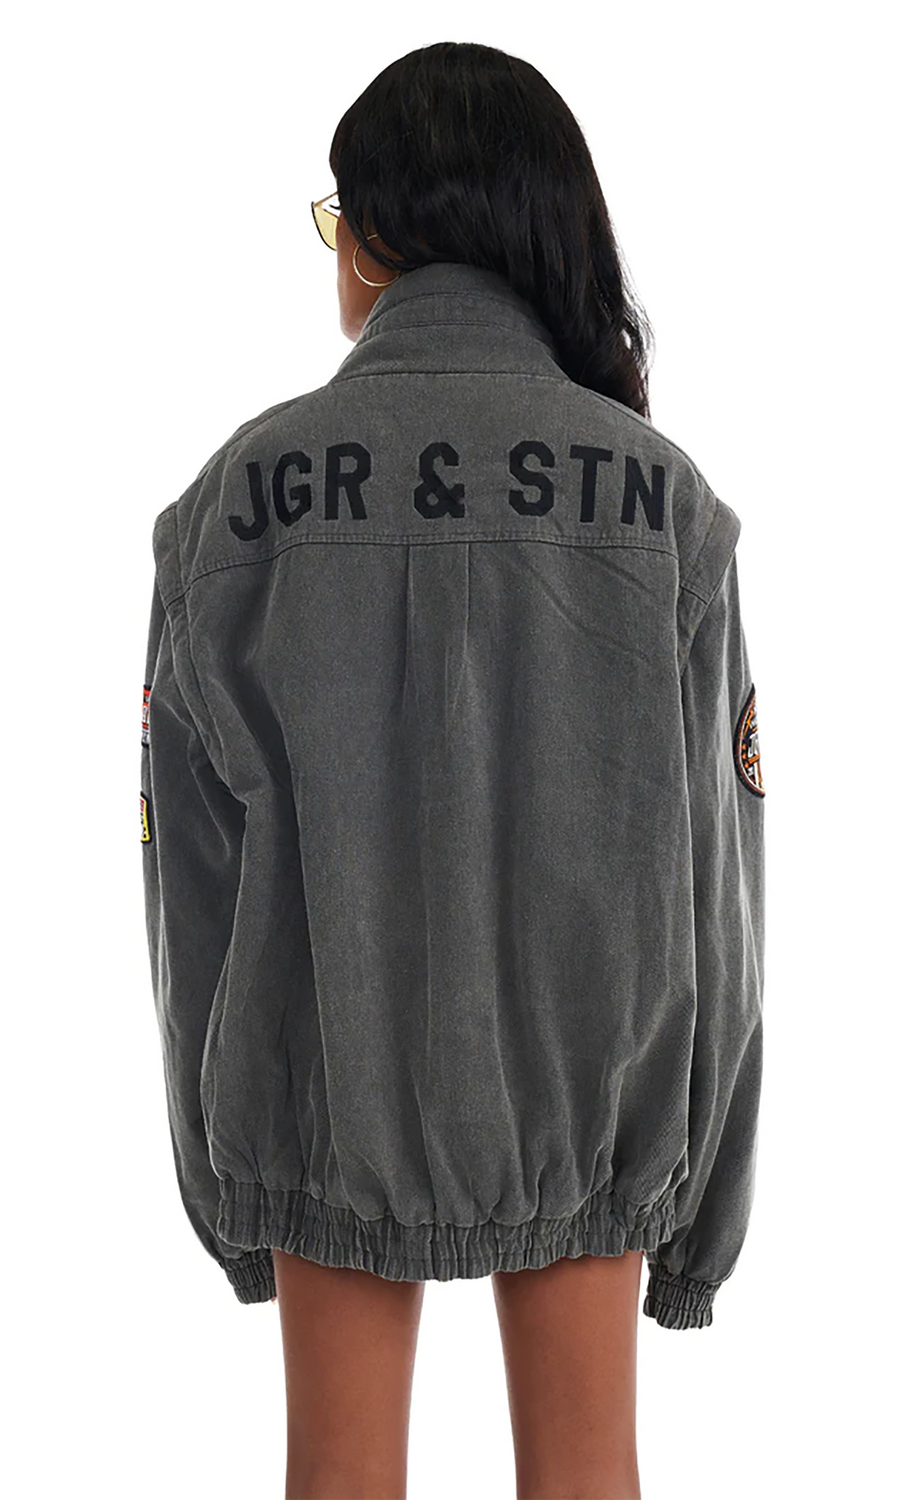 Davidson Jacket by JGR & STN - FINAL SALE